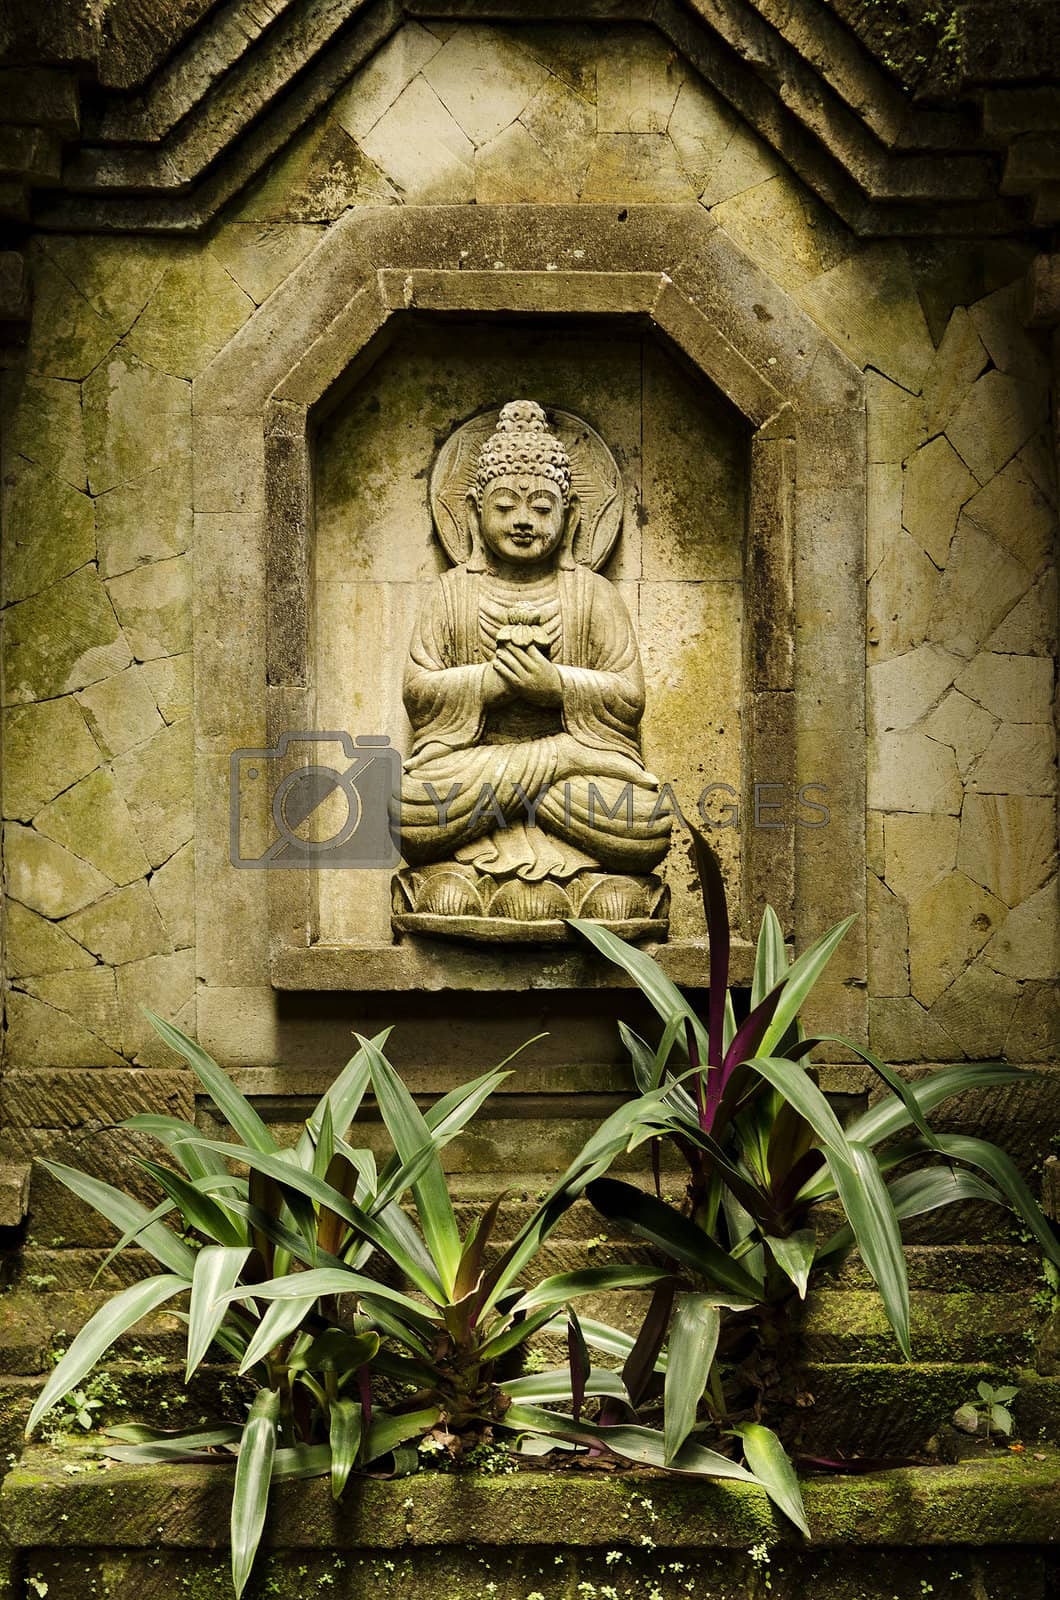 Royalty free image of buddha image in bali indonesia by jackmalipan